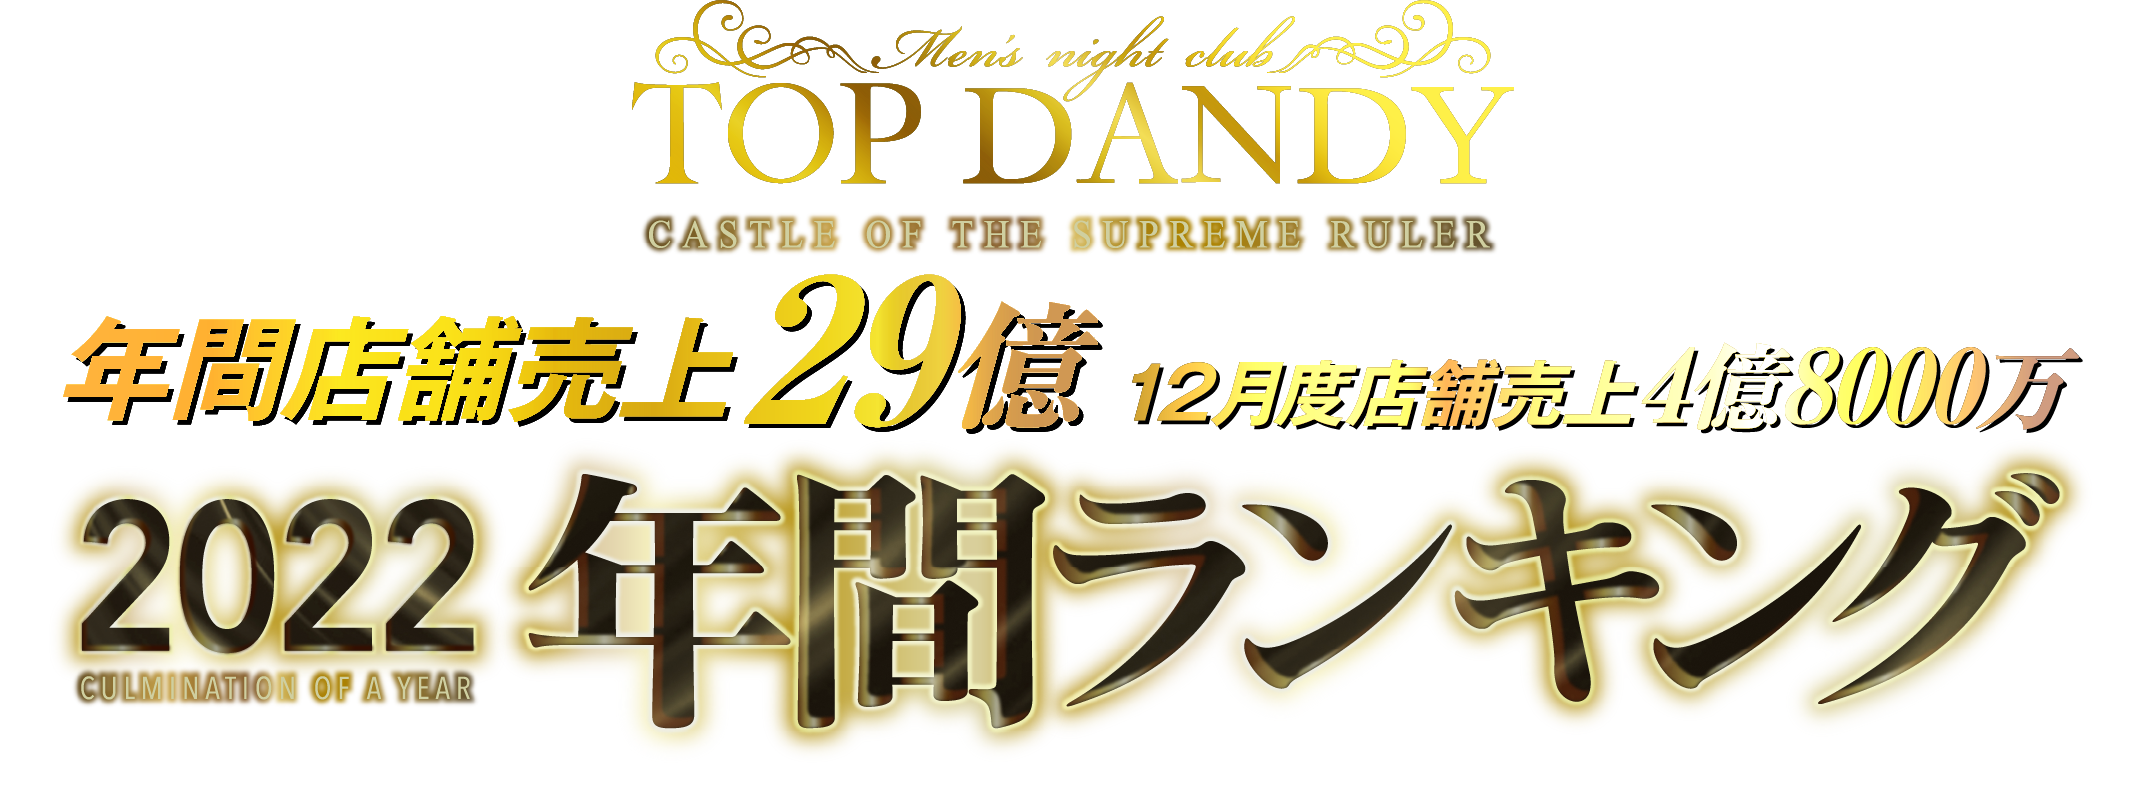 TOP DANDY 年間[売上/組数]ランキング